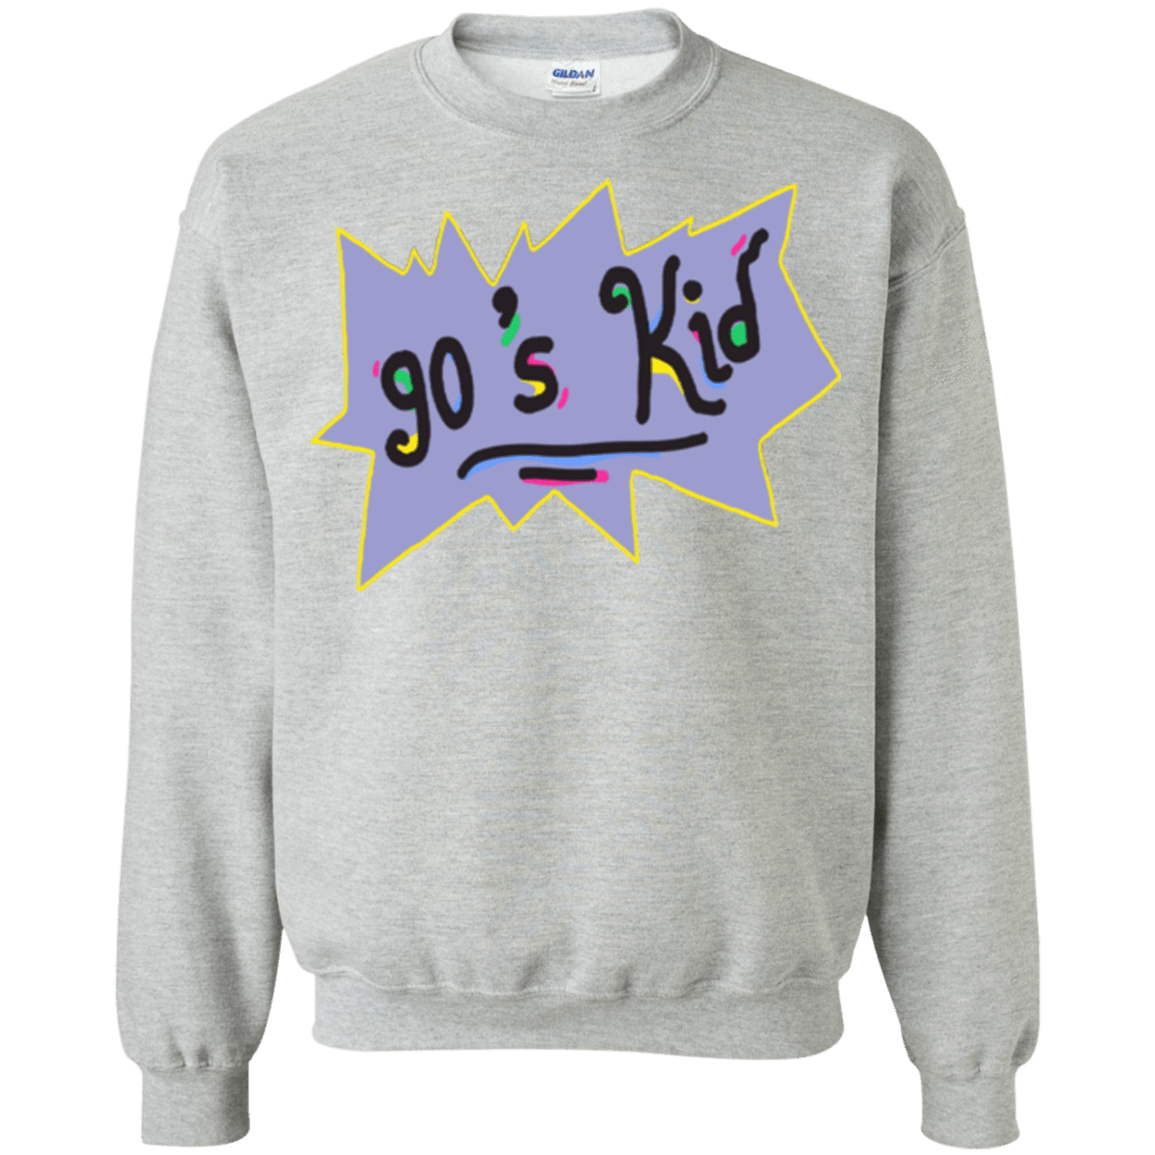 Sweatshirts Sport Grey / Small 90's Kid Crewneck Sweatshirt